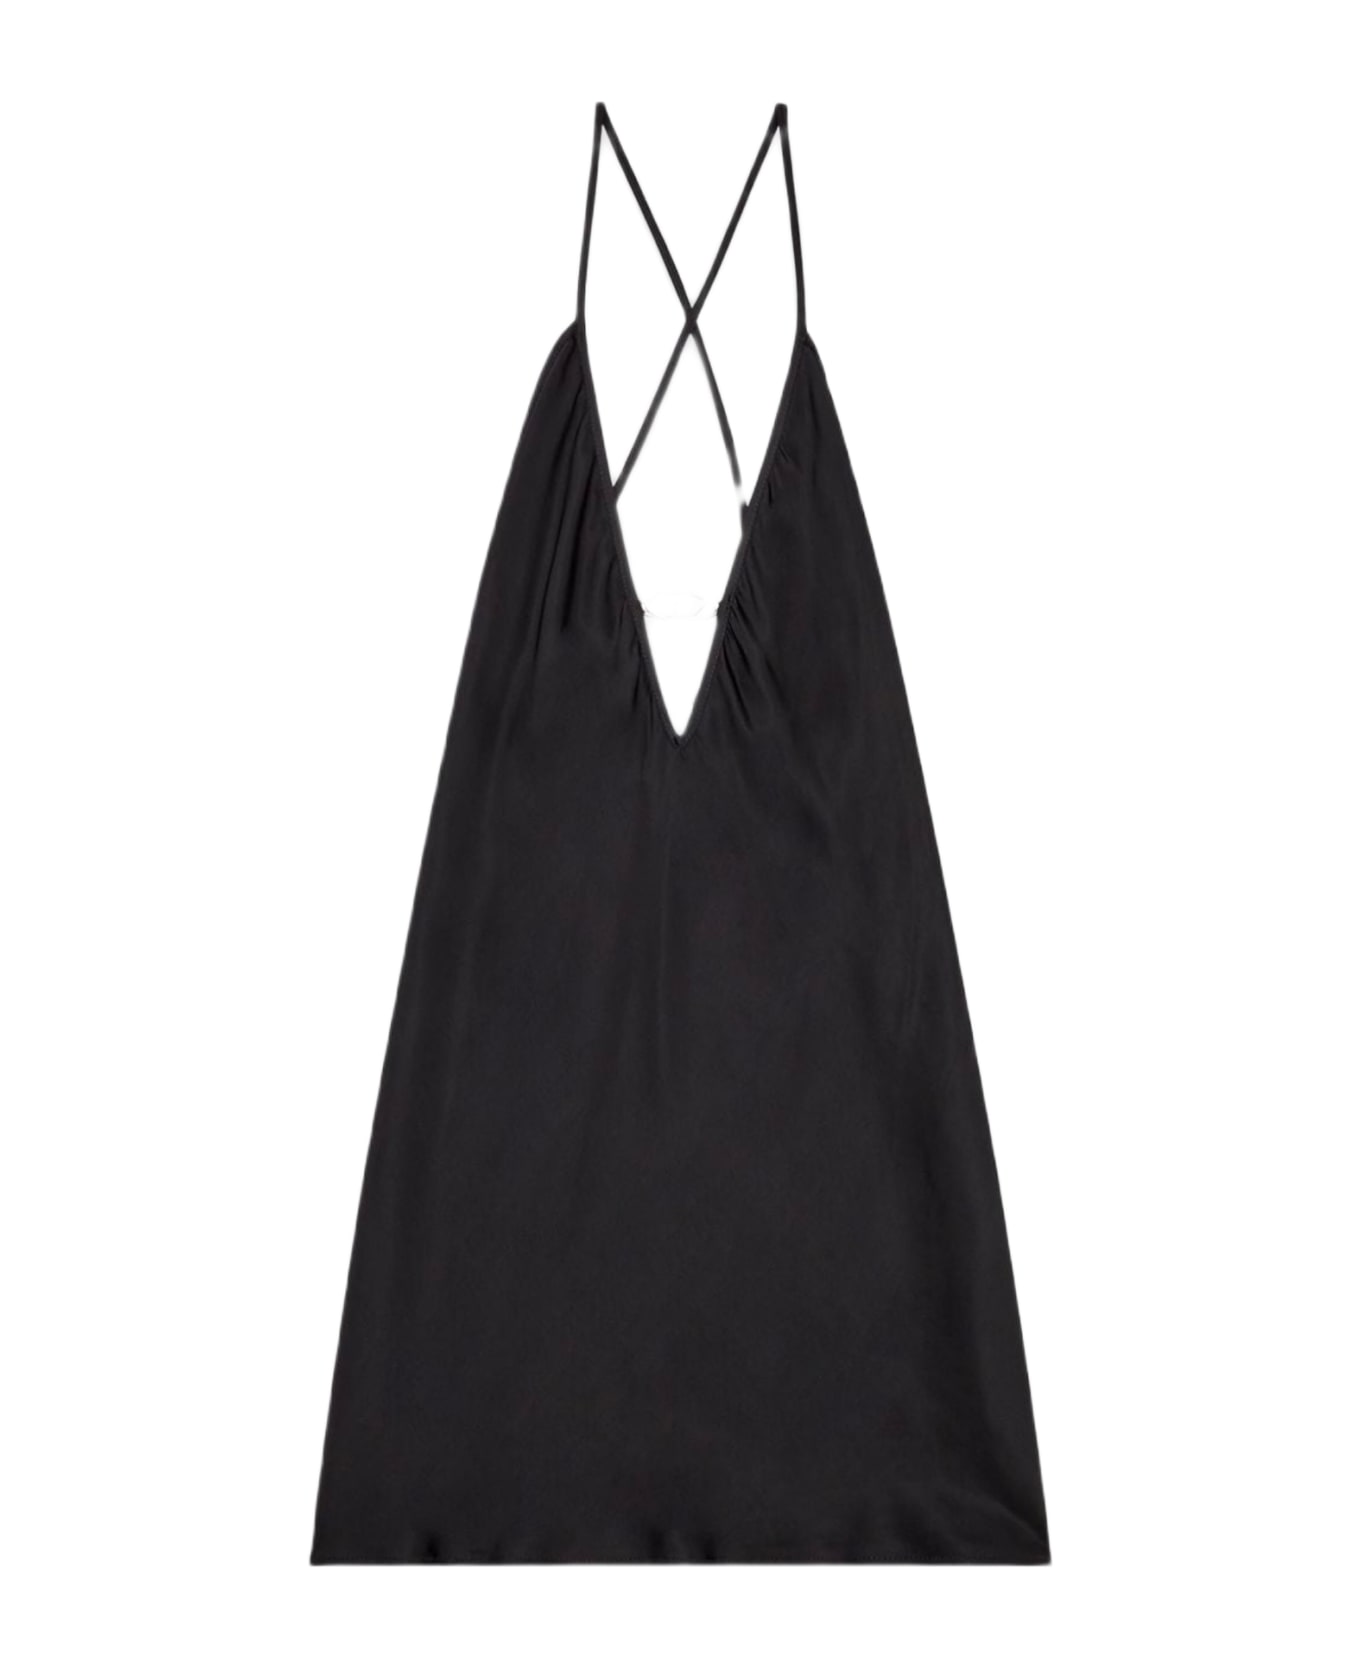 Diesel Ufpt-mayra-d Black satin mini dress with Oval D logo - Ufpt Mayra D - Nero キャミソール